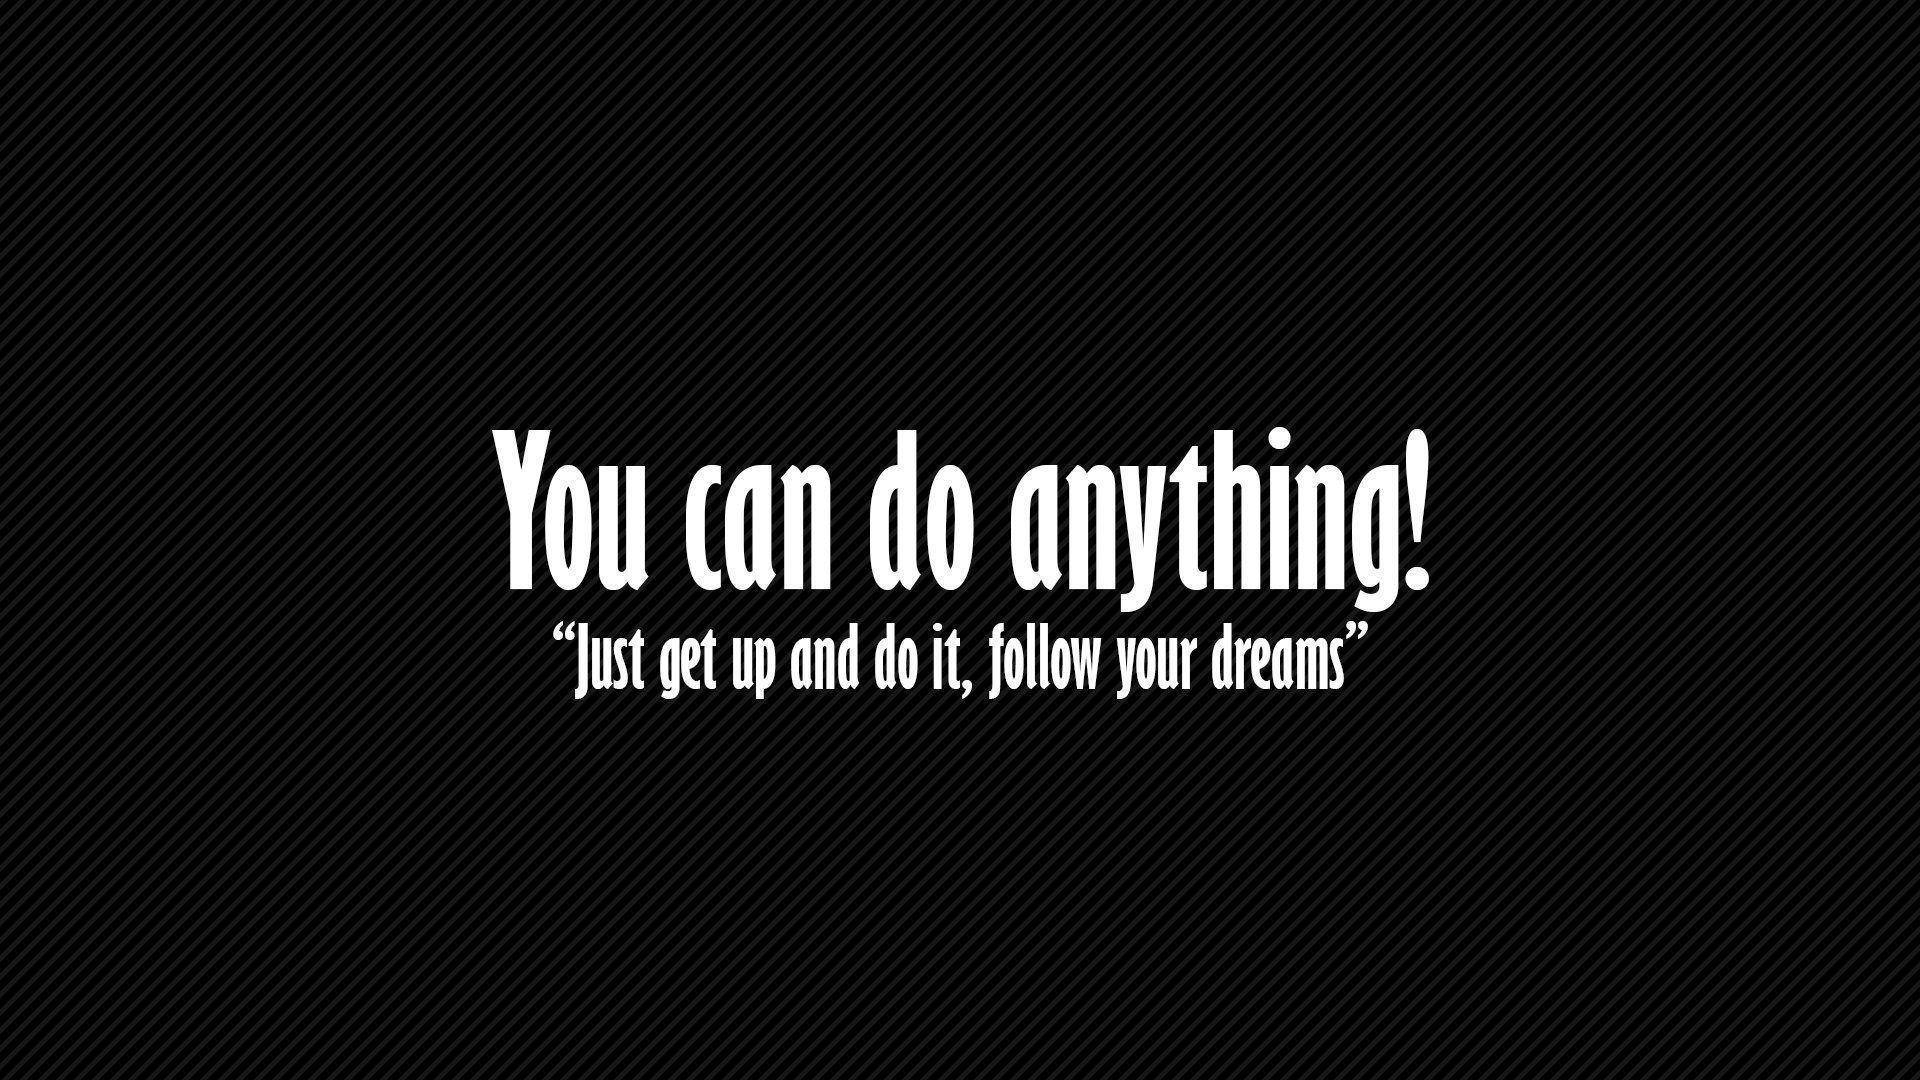 Follow Your Dreams Motivational Hd